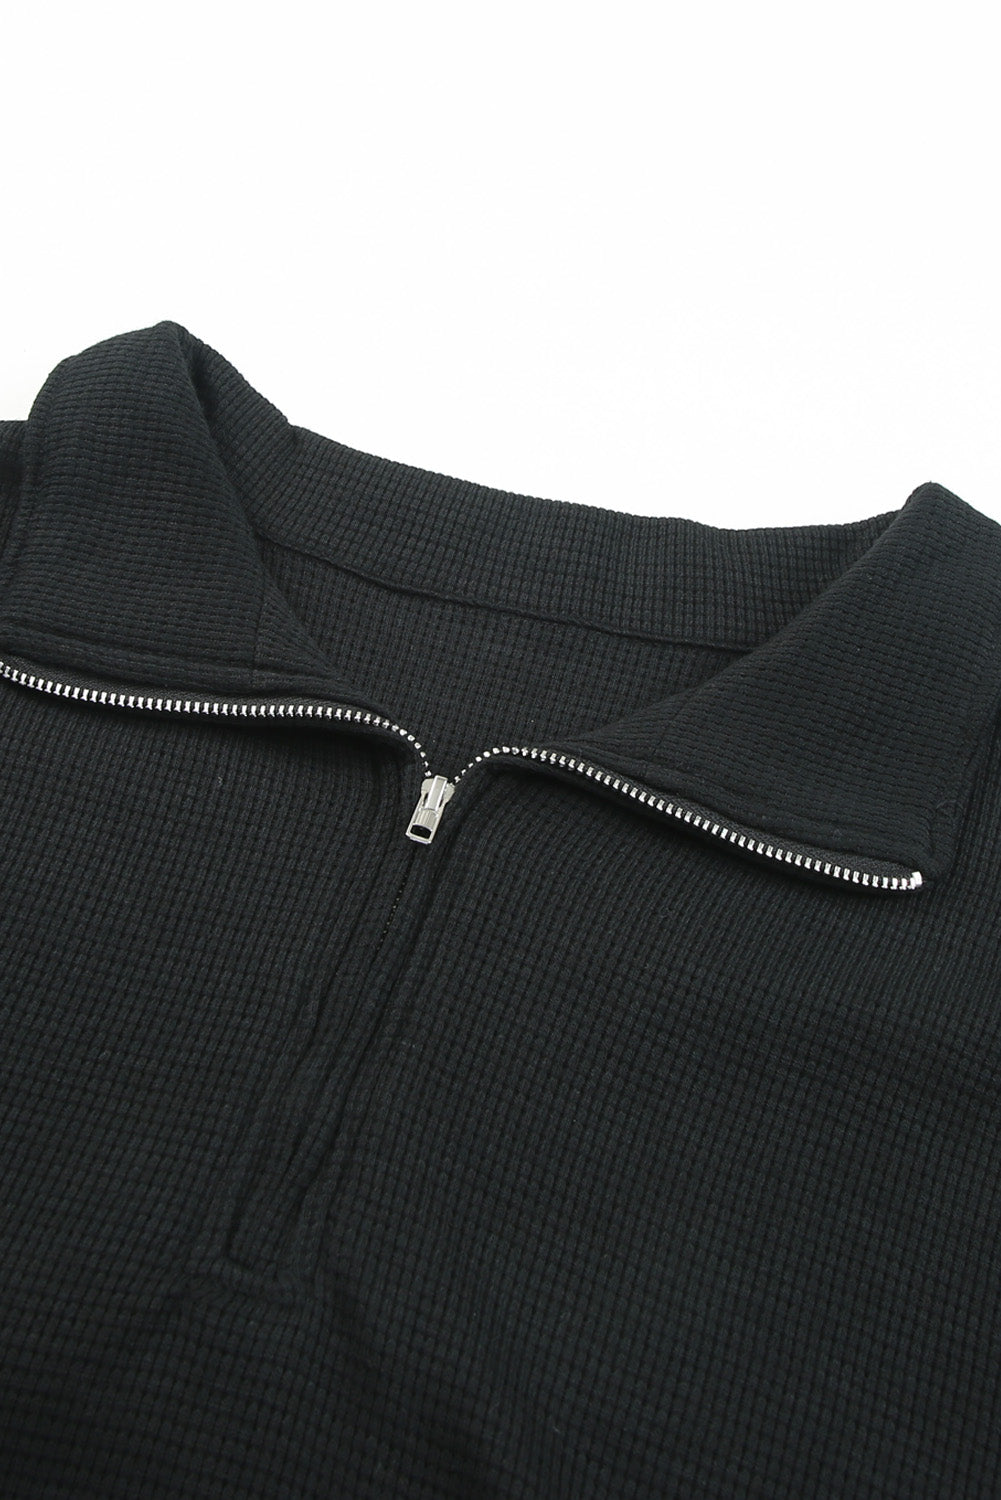 Gray Ribbed Zipper Sweatshirt and High Waist Shorts Set